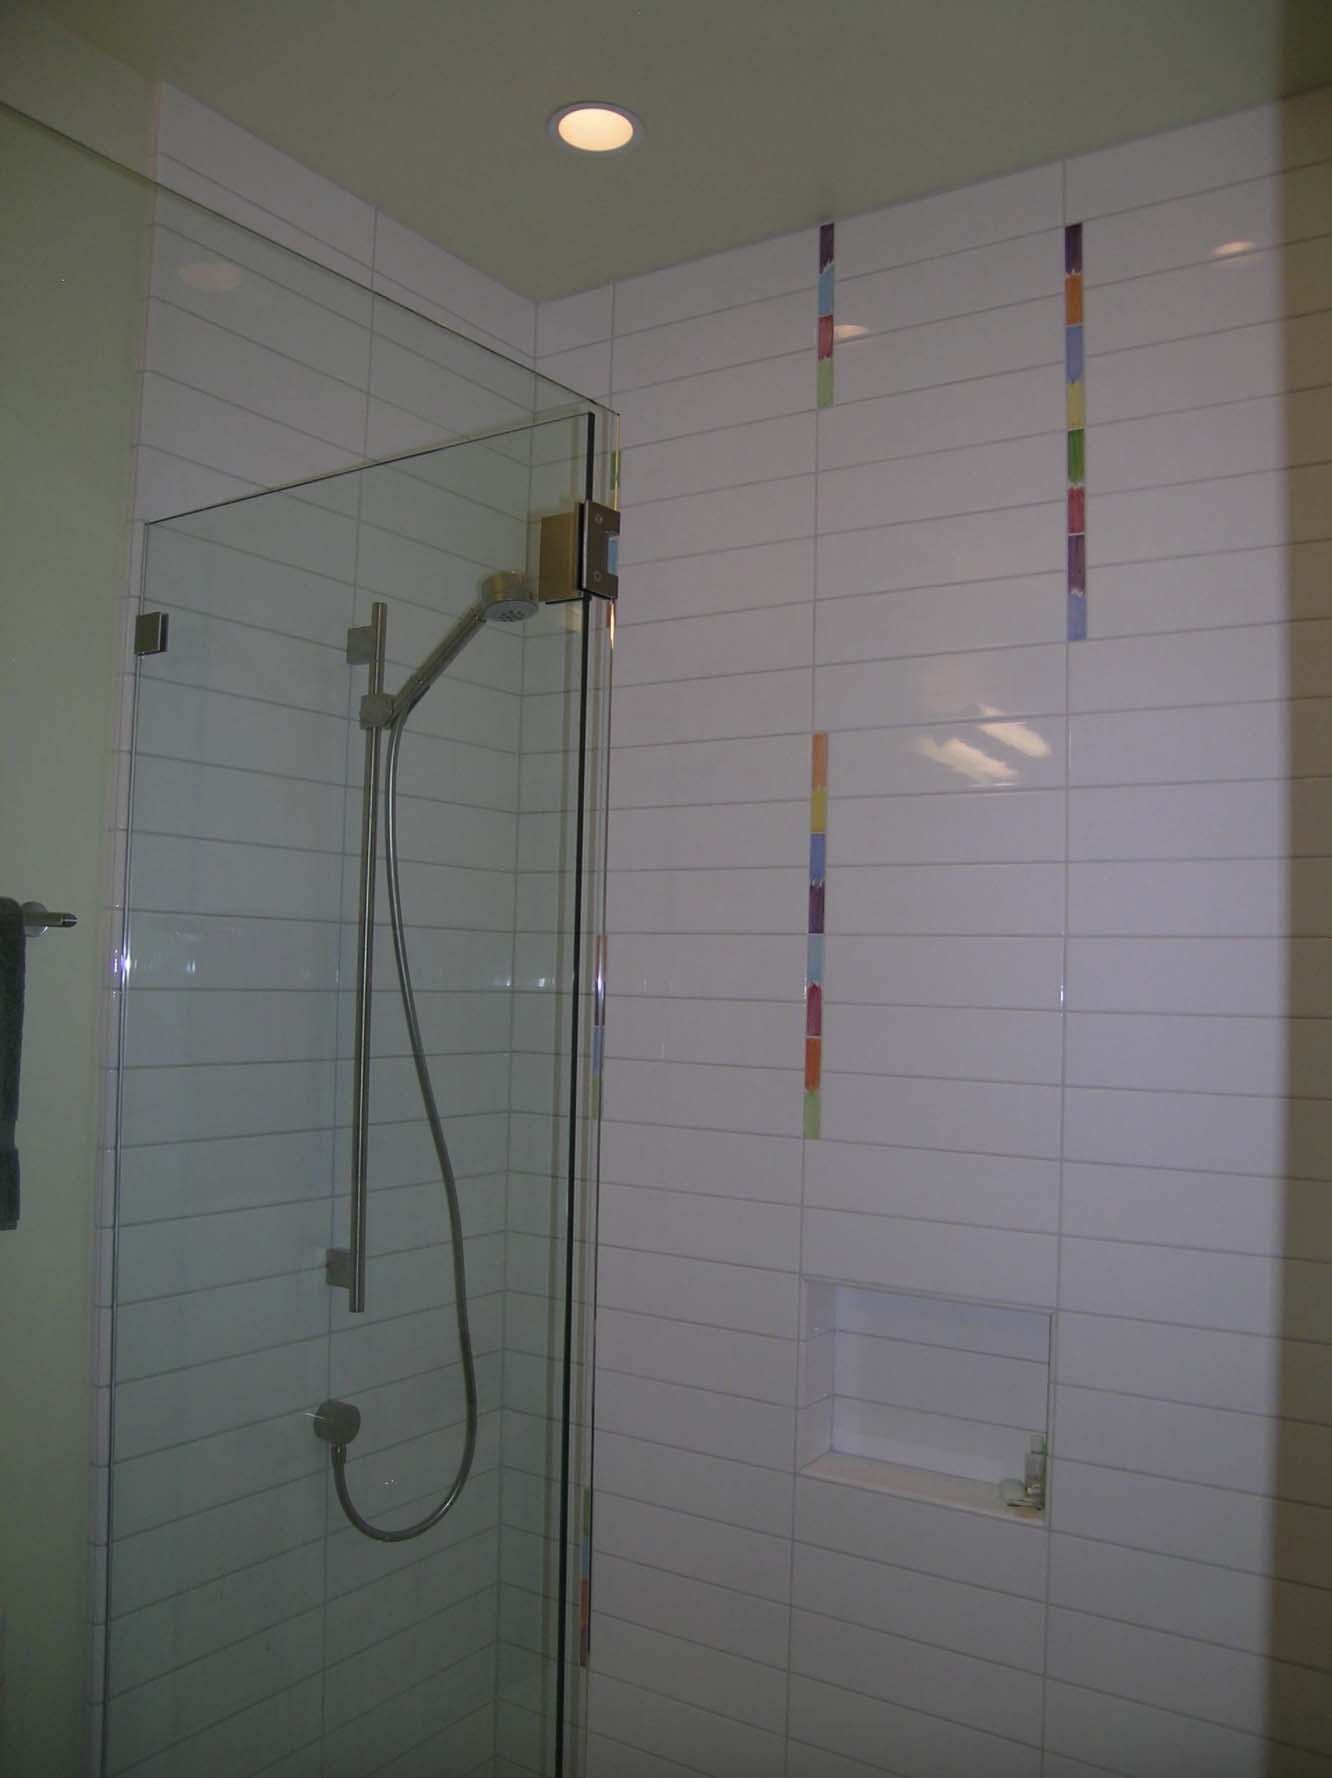 tile detail in the shower